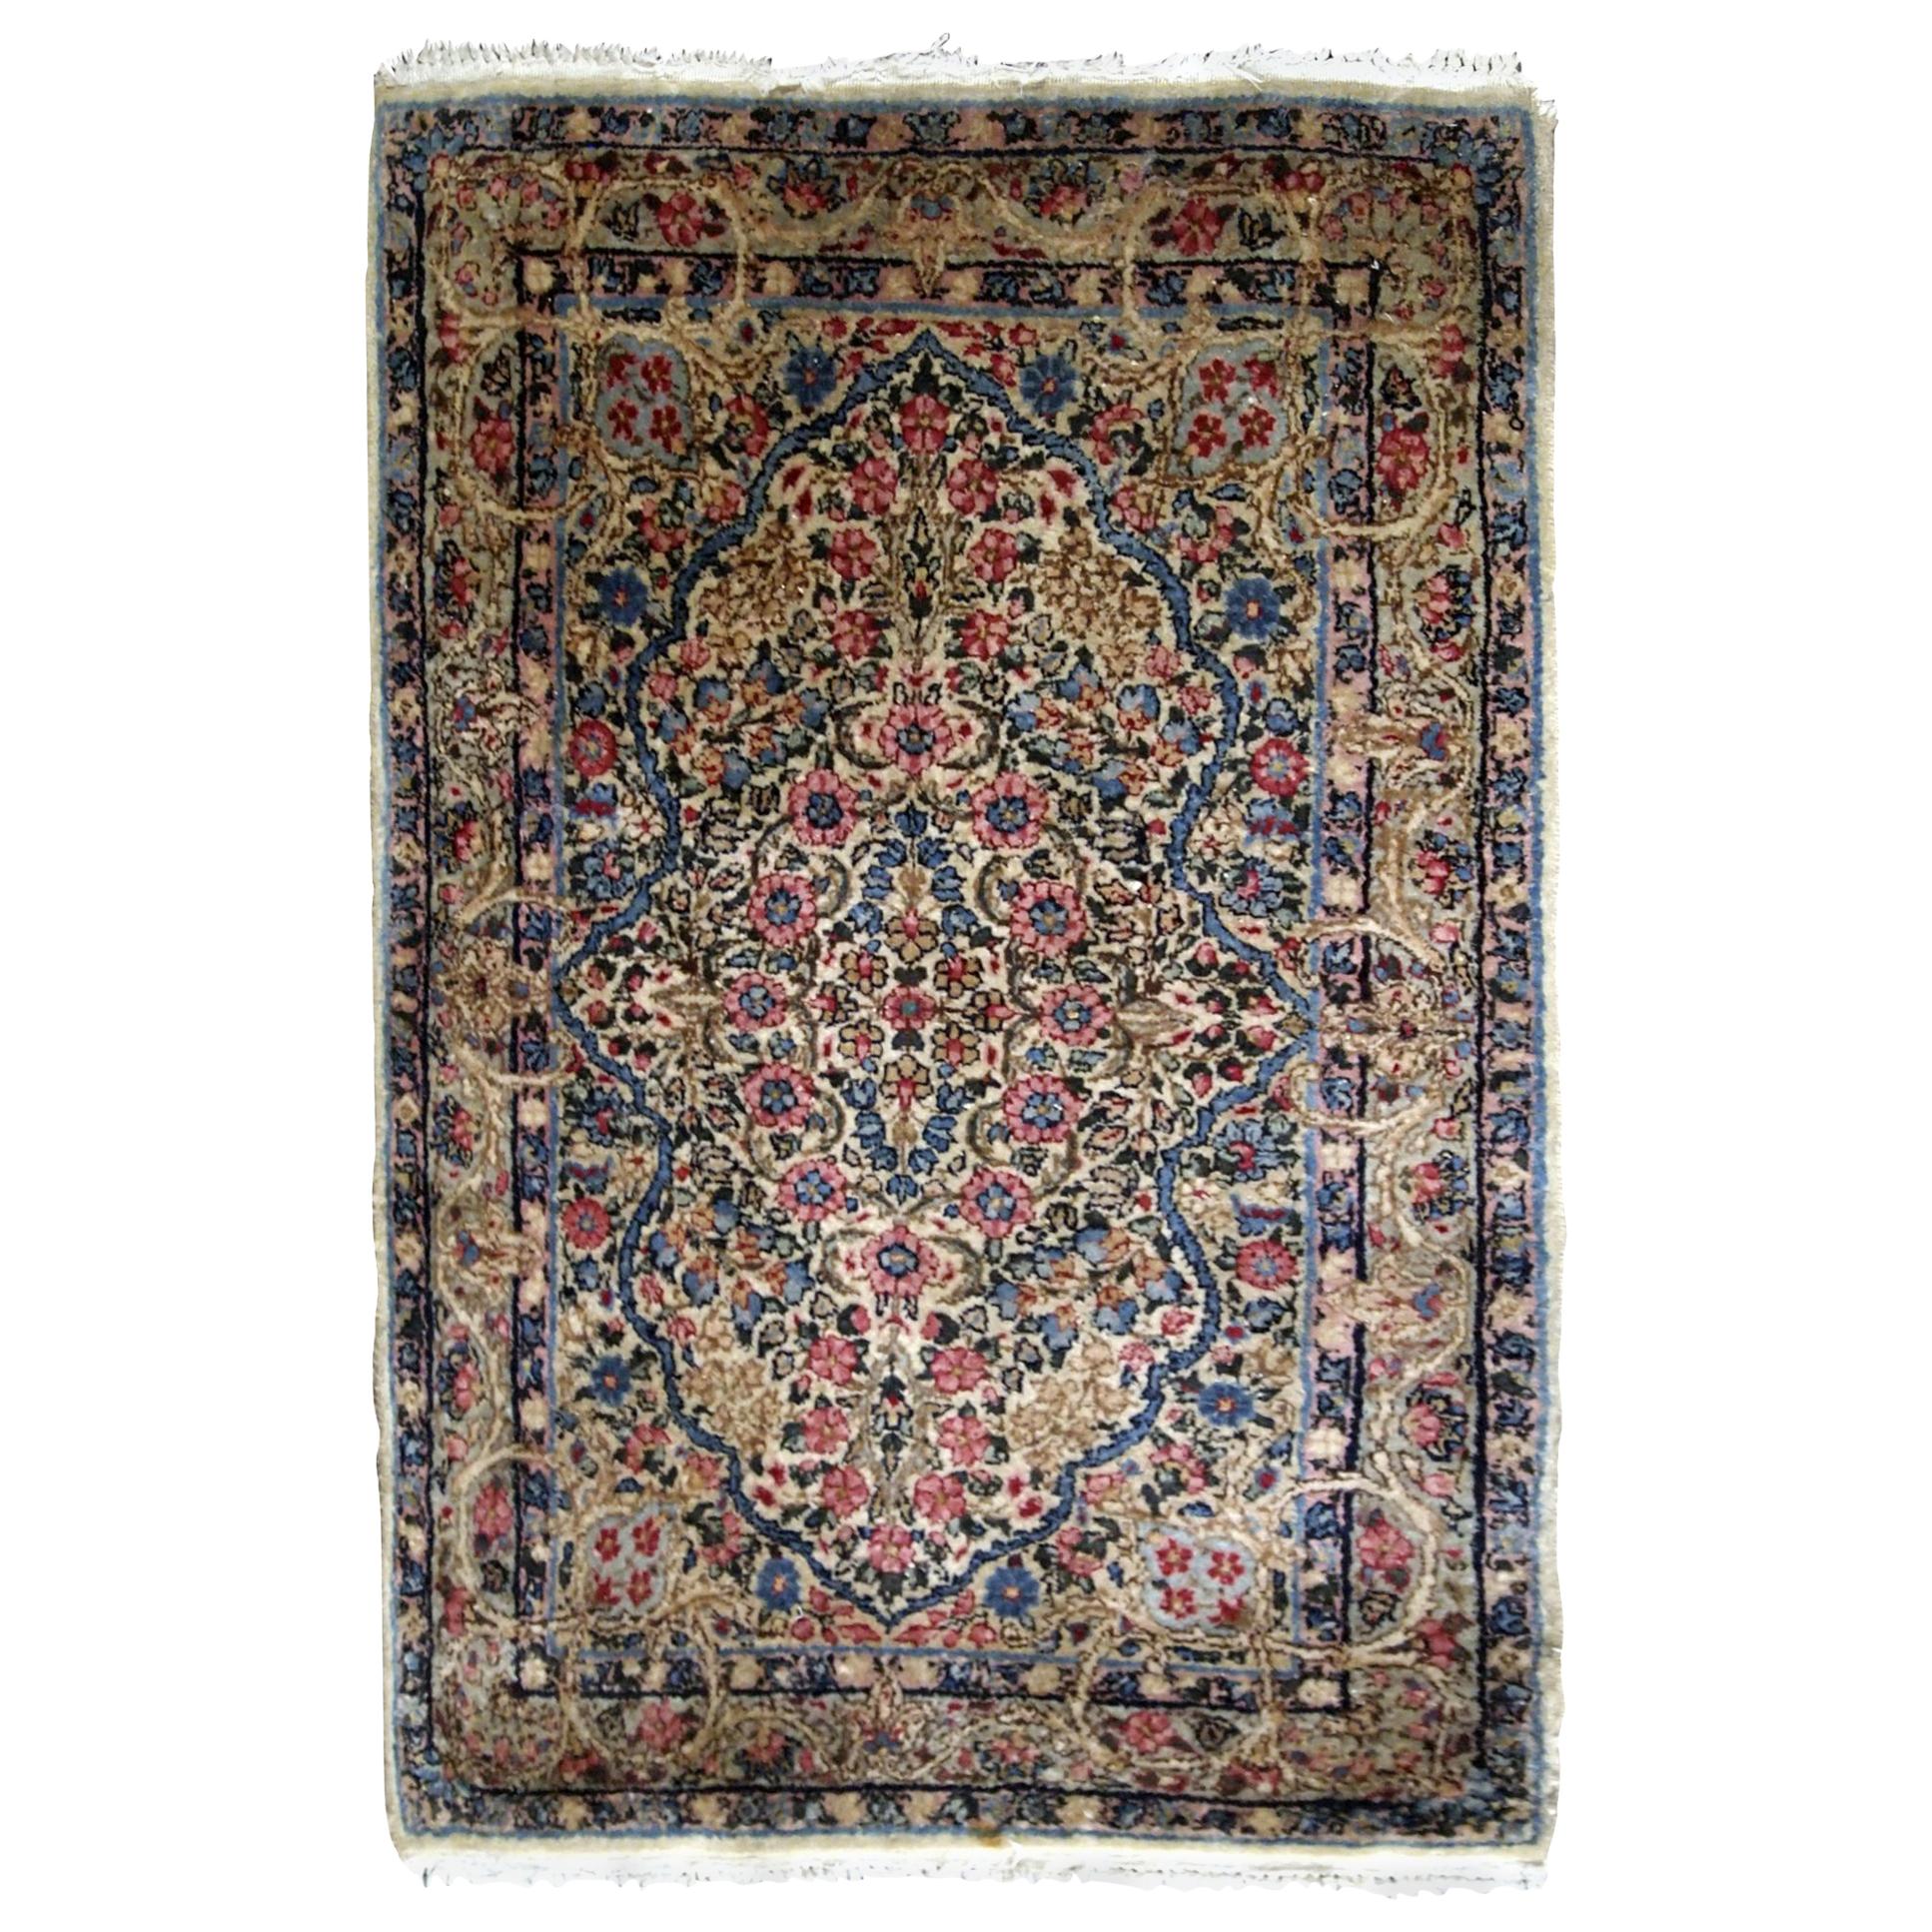 Details about   Indian Carpet Hand Woven 100% Natural Rectangular Cotton Field wohndeko show original title 